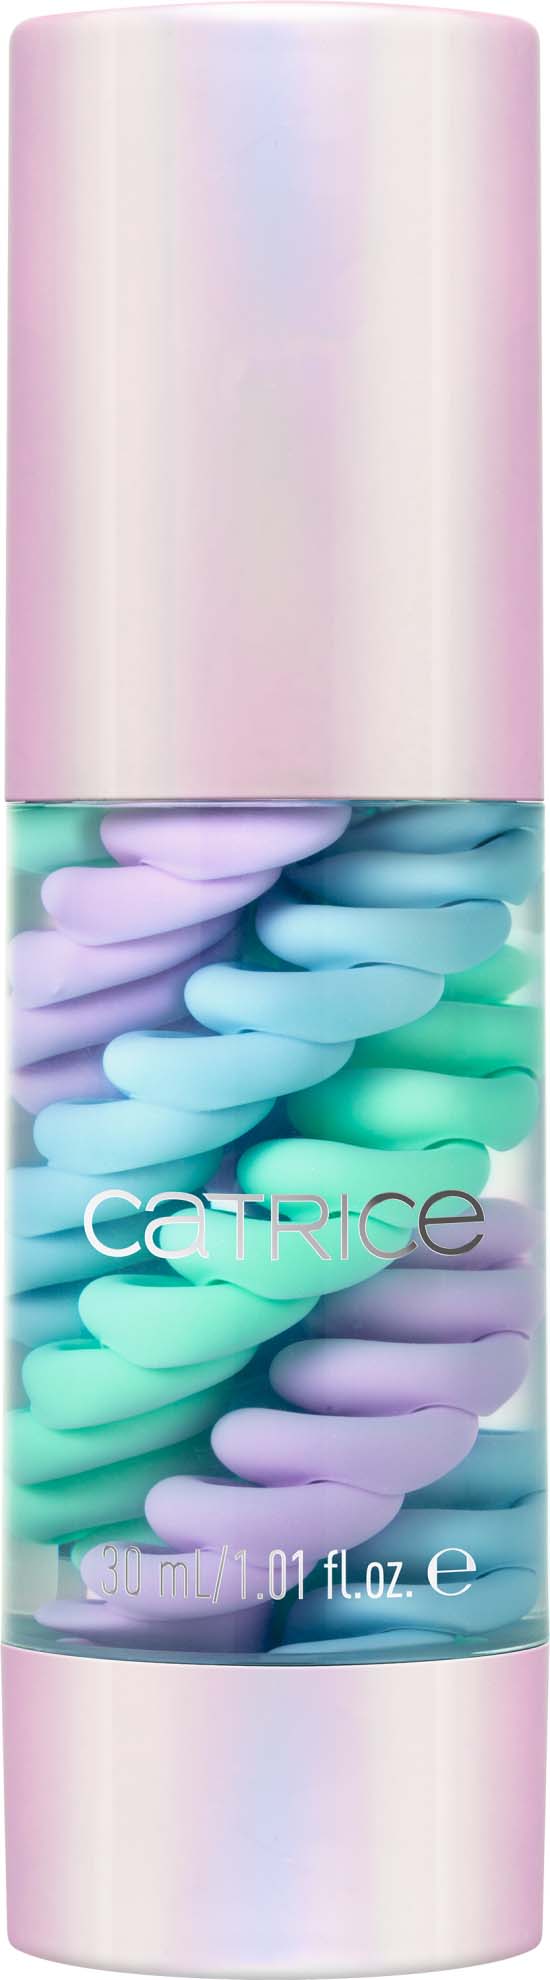 Catrice METAFACE Colour Correcting Glaze Primer 30 ml